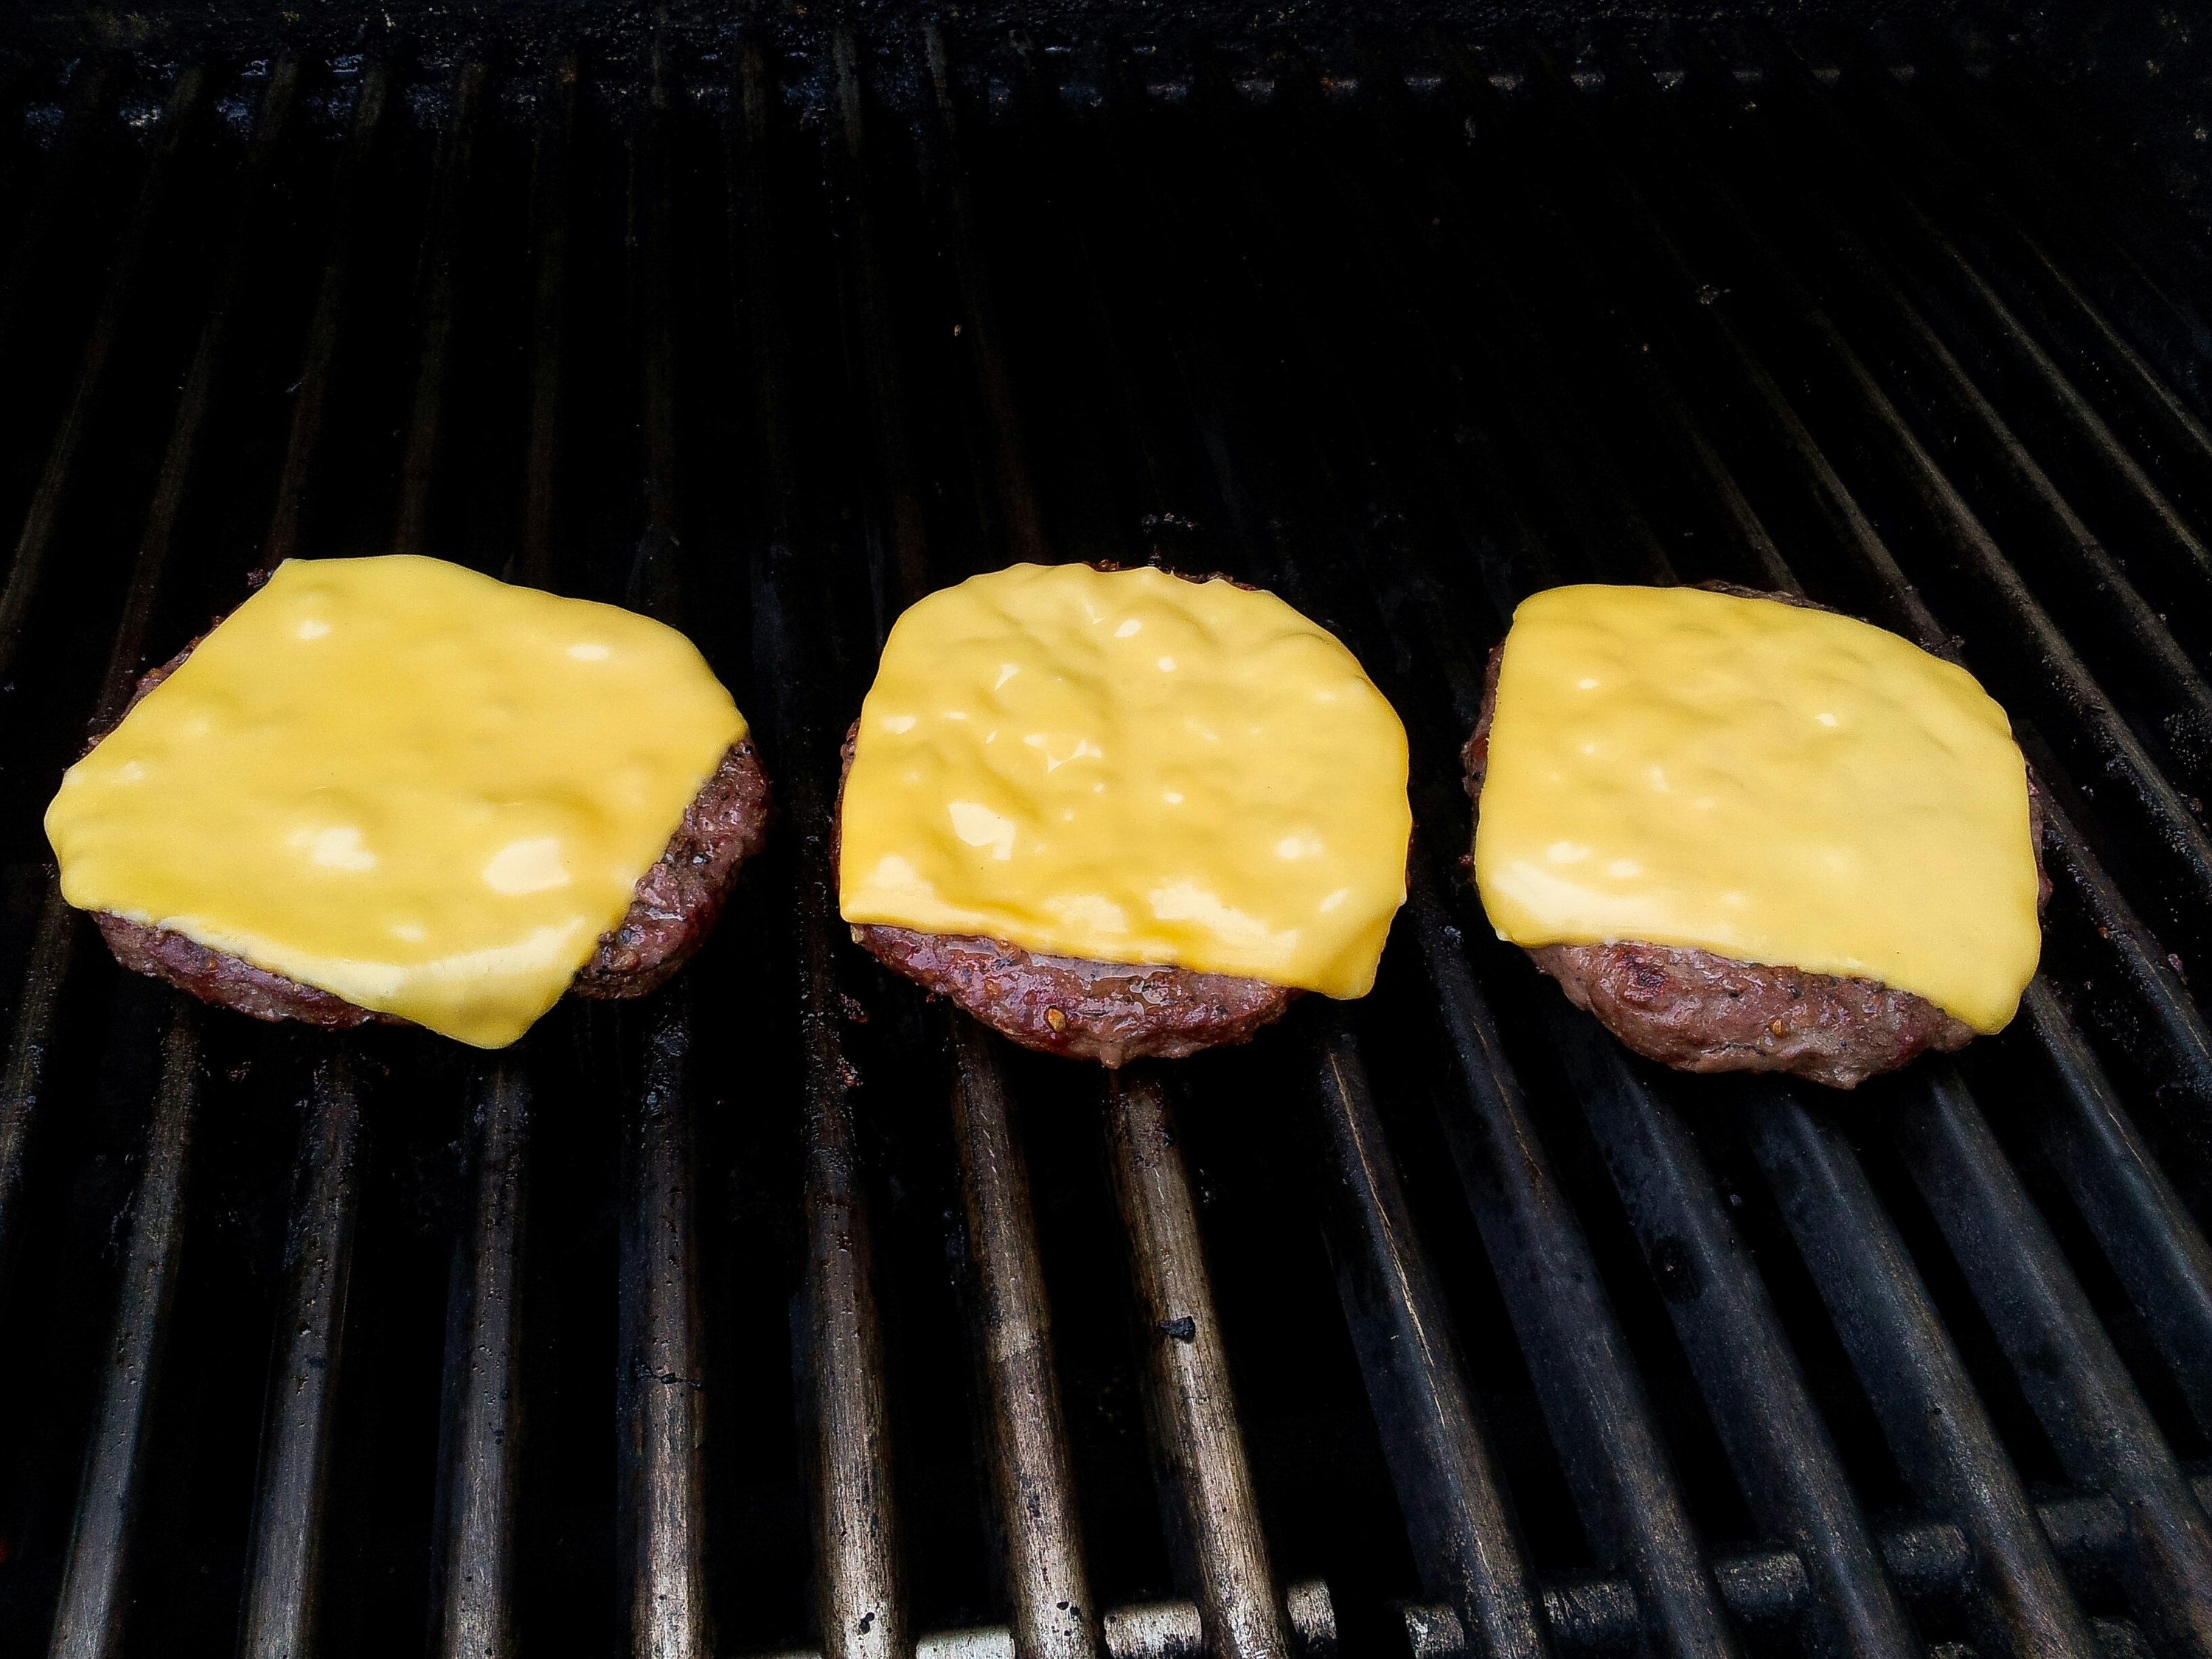 Three cheeseburger patties on a grill.